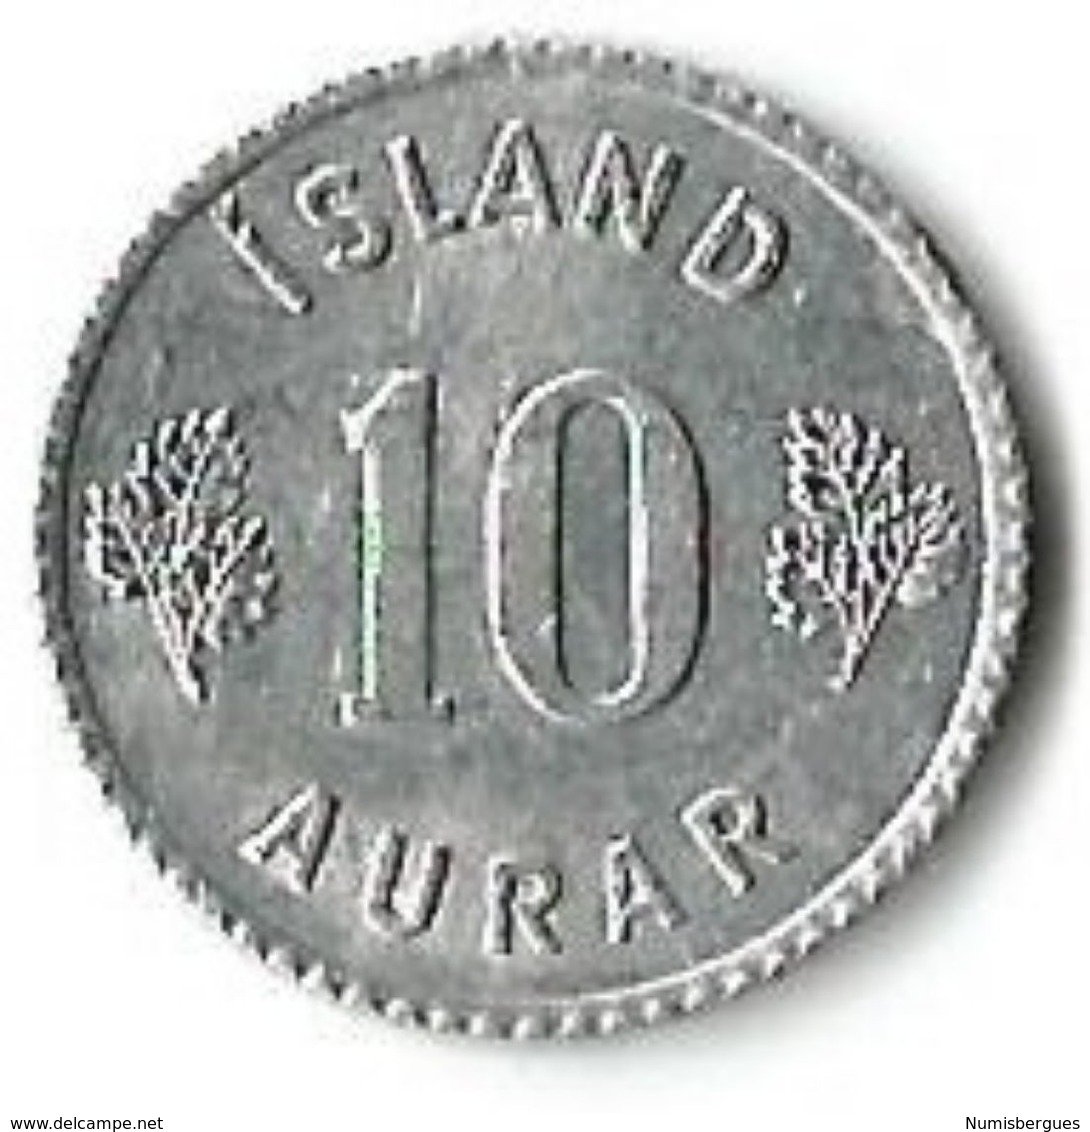 1 Pièce De Monnaie 10 Aurars 1970 - Iceland